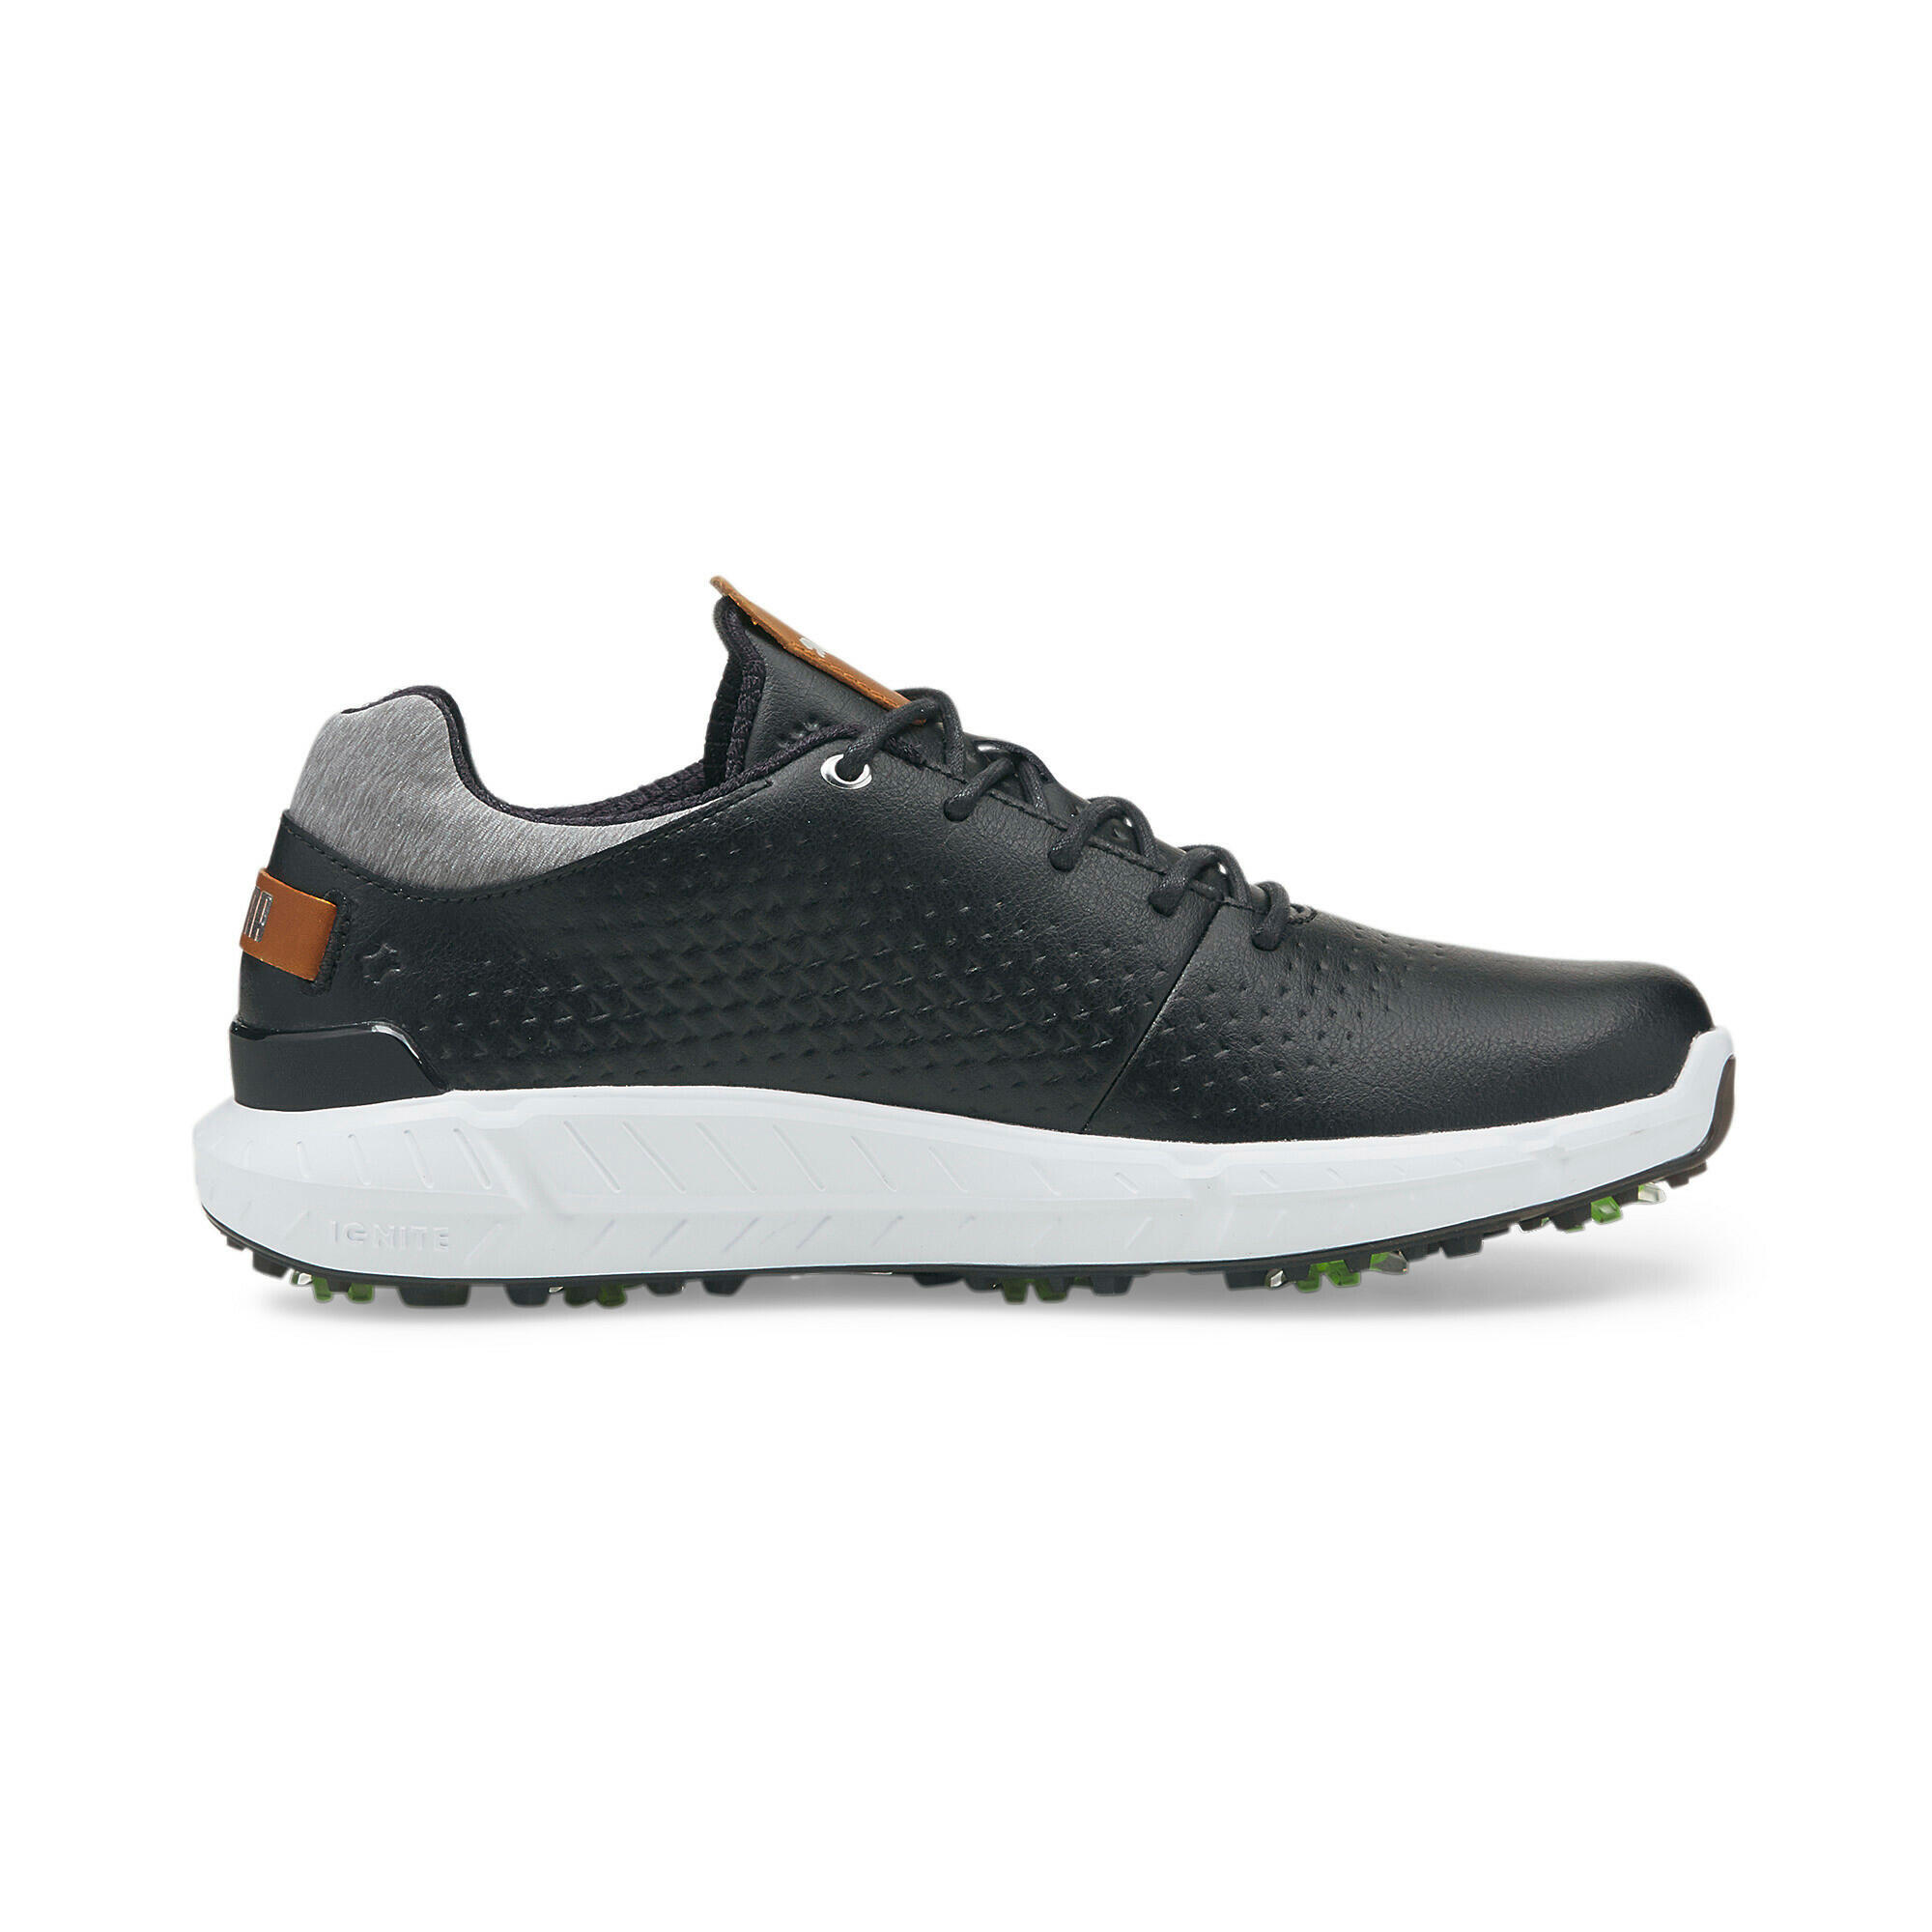 Puma IGNITE ARTICULATE Leather Golf Shoes Black/Silver 7/7